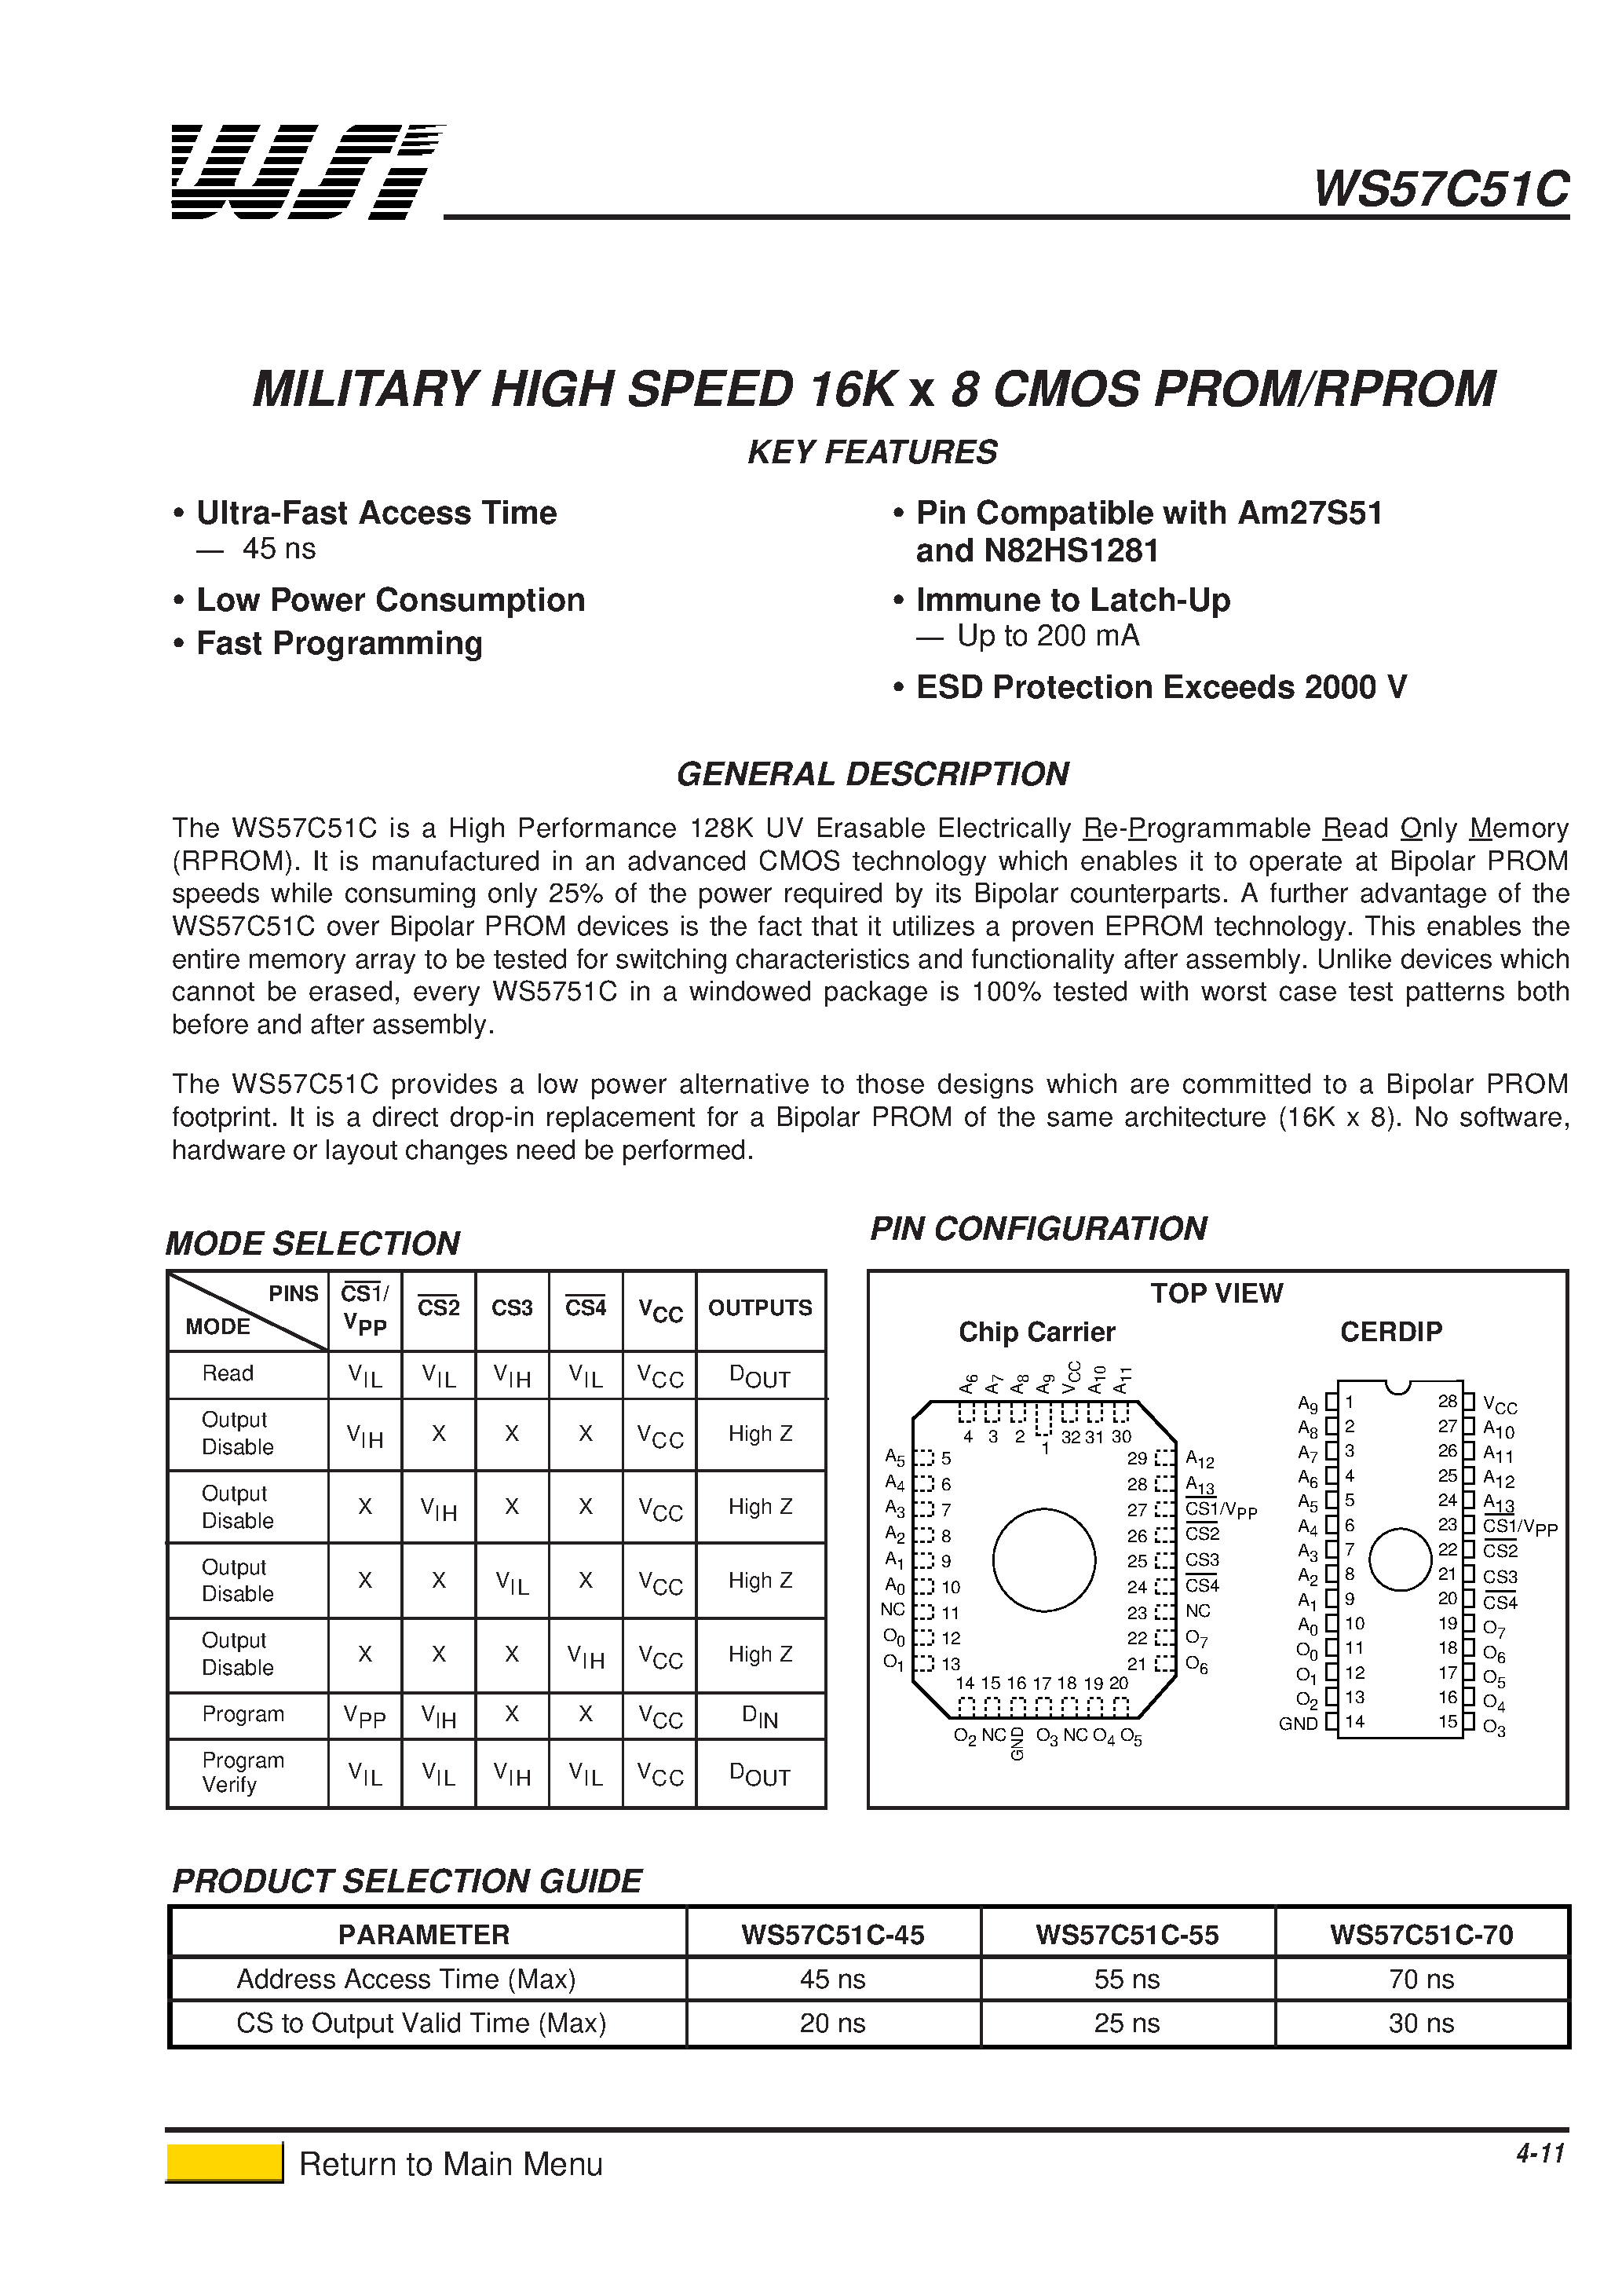 Datasheet WS57C51C-55DMB - HIGH SPEED 16K x 8 CMOS PROM/RPROM page 1